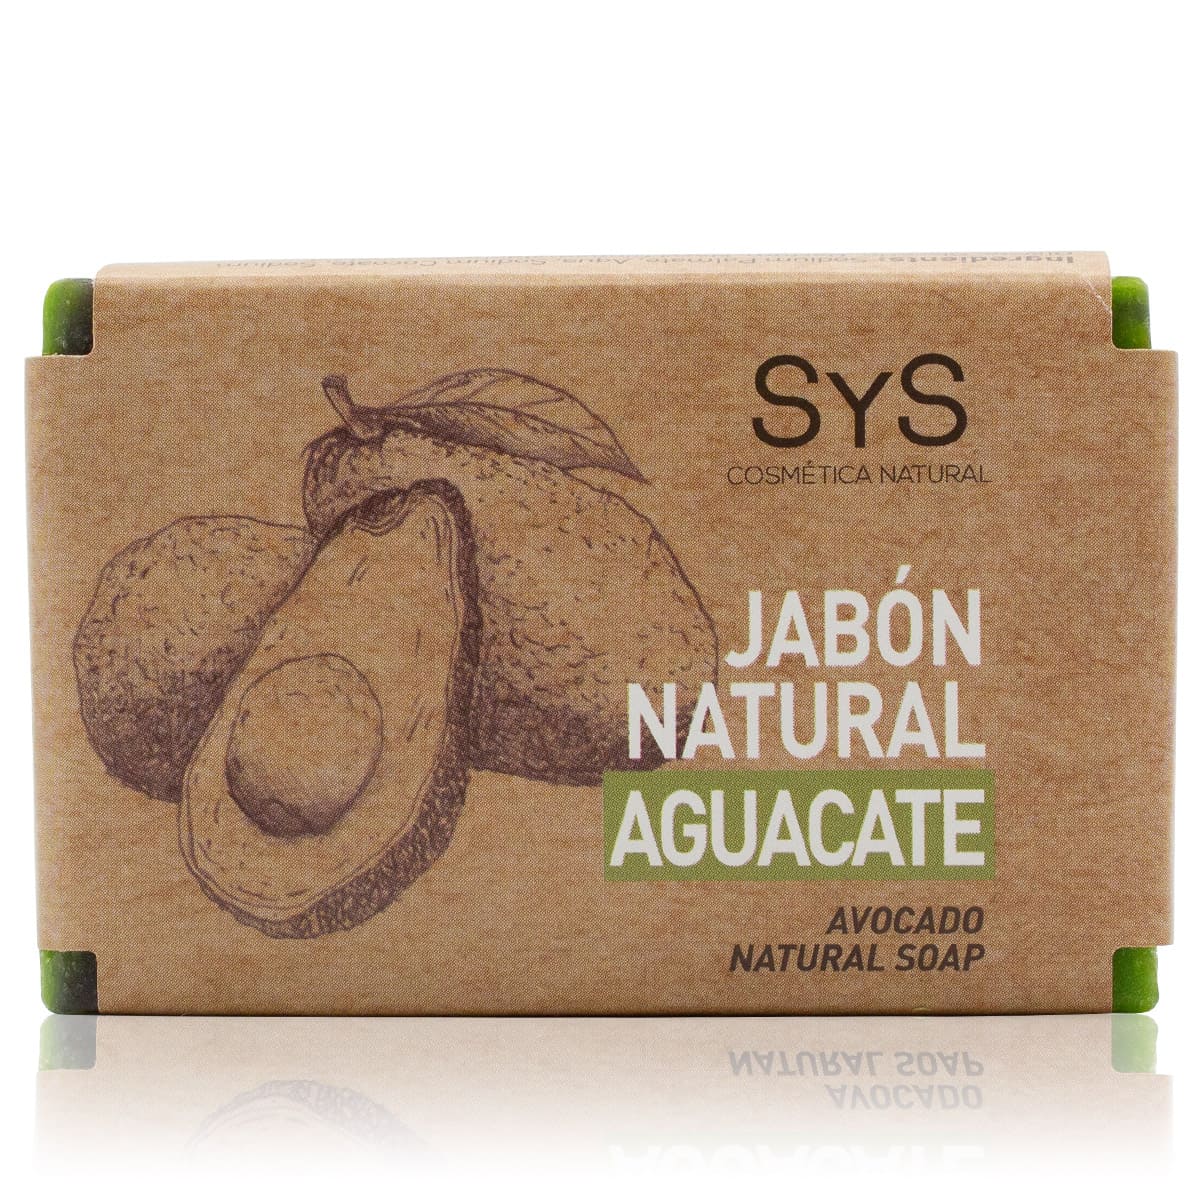 Comprar Jabon Natural Aguacate 100gr SYS